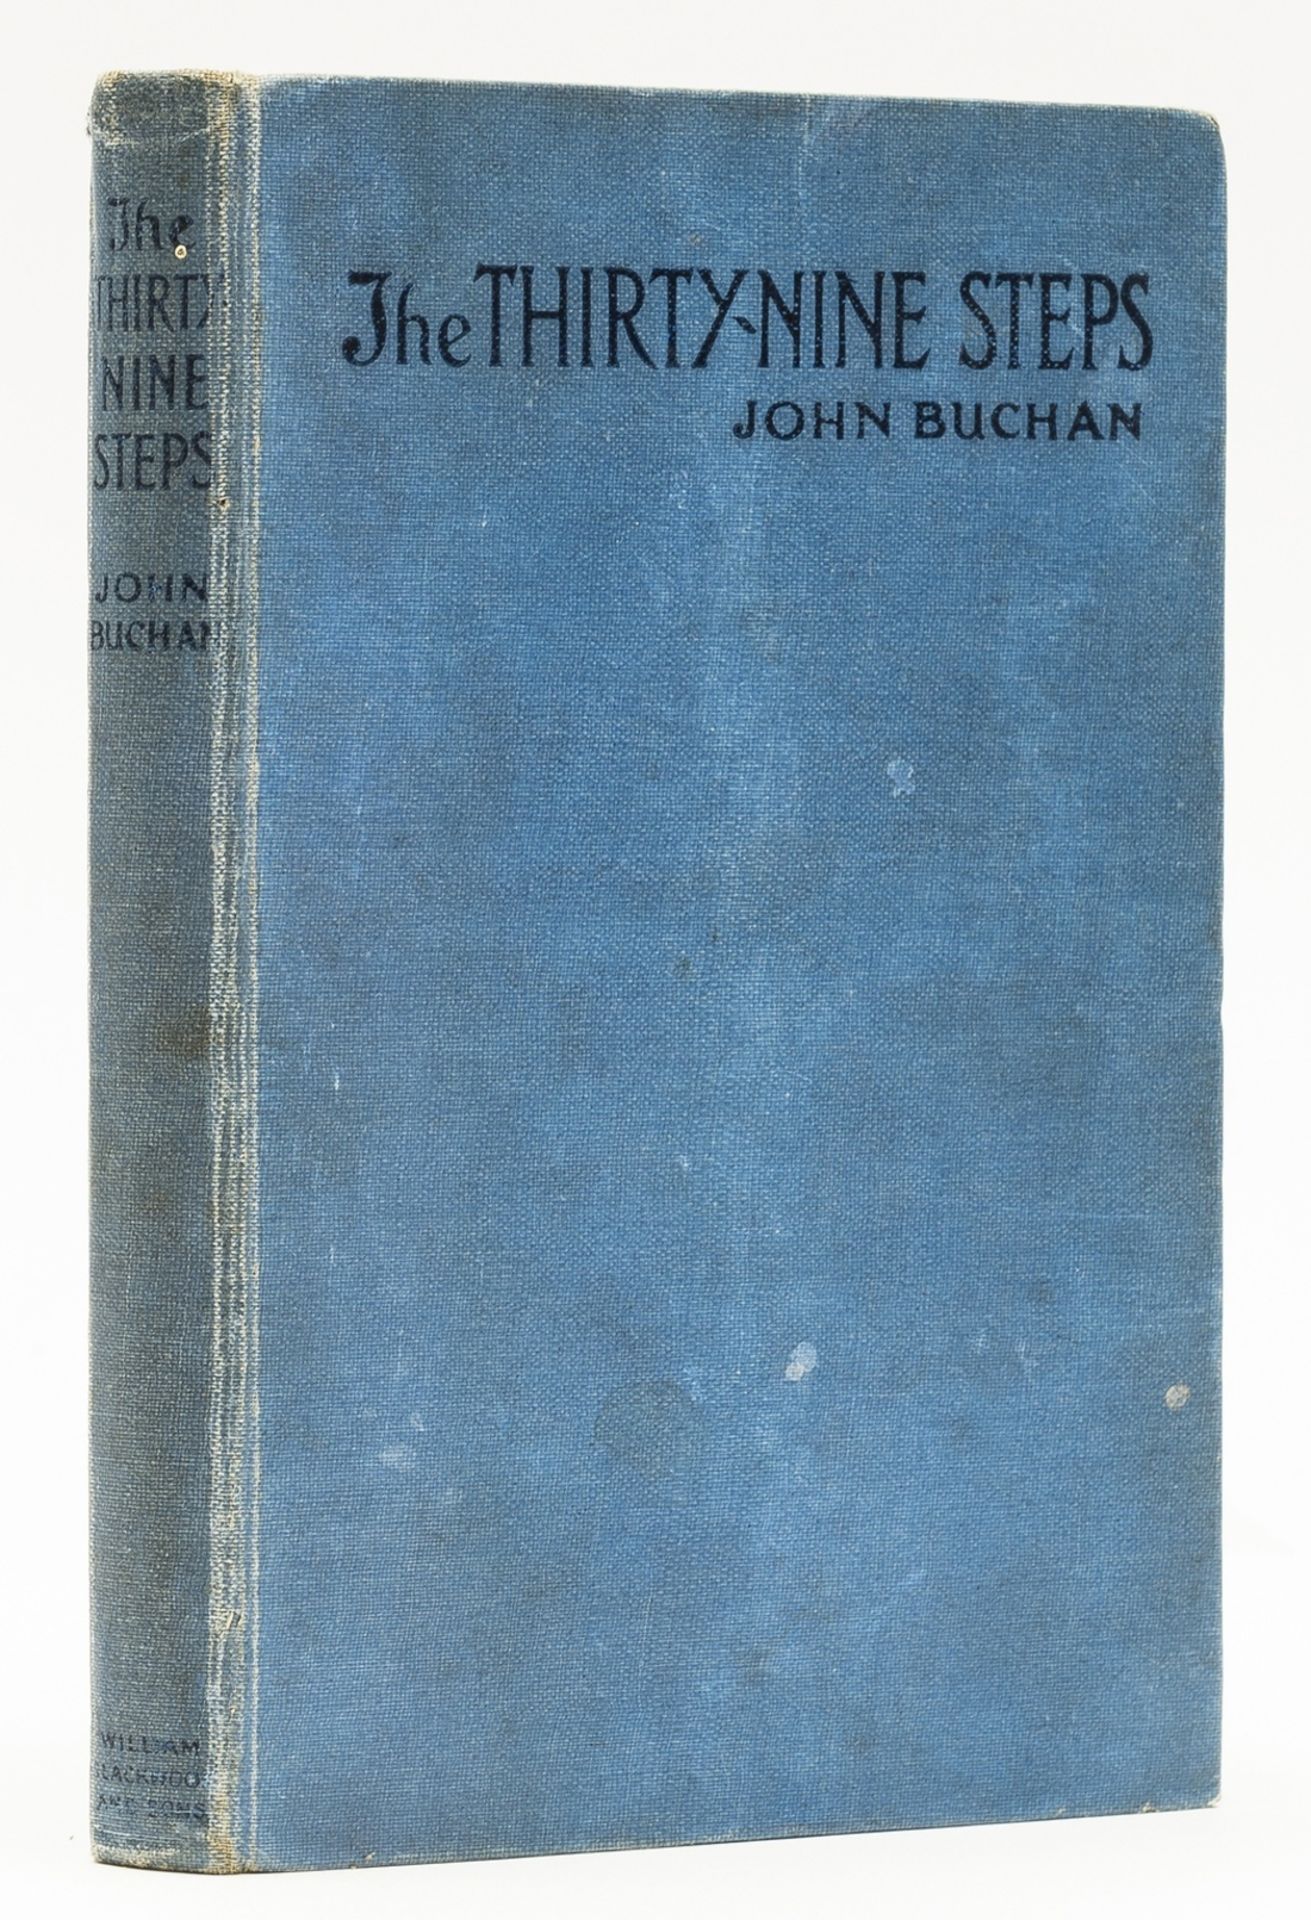 Buchan (John) The Thirty-Nine Steps, first edition, 1915.